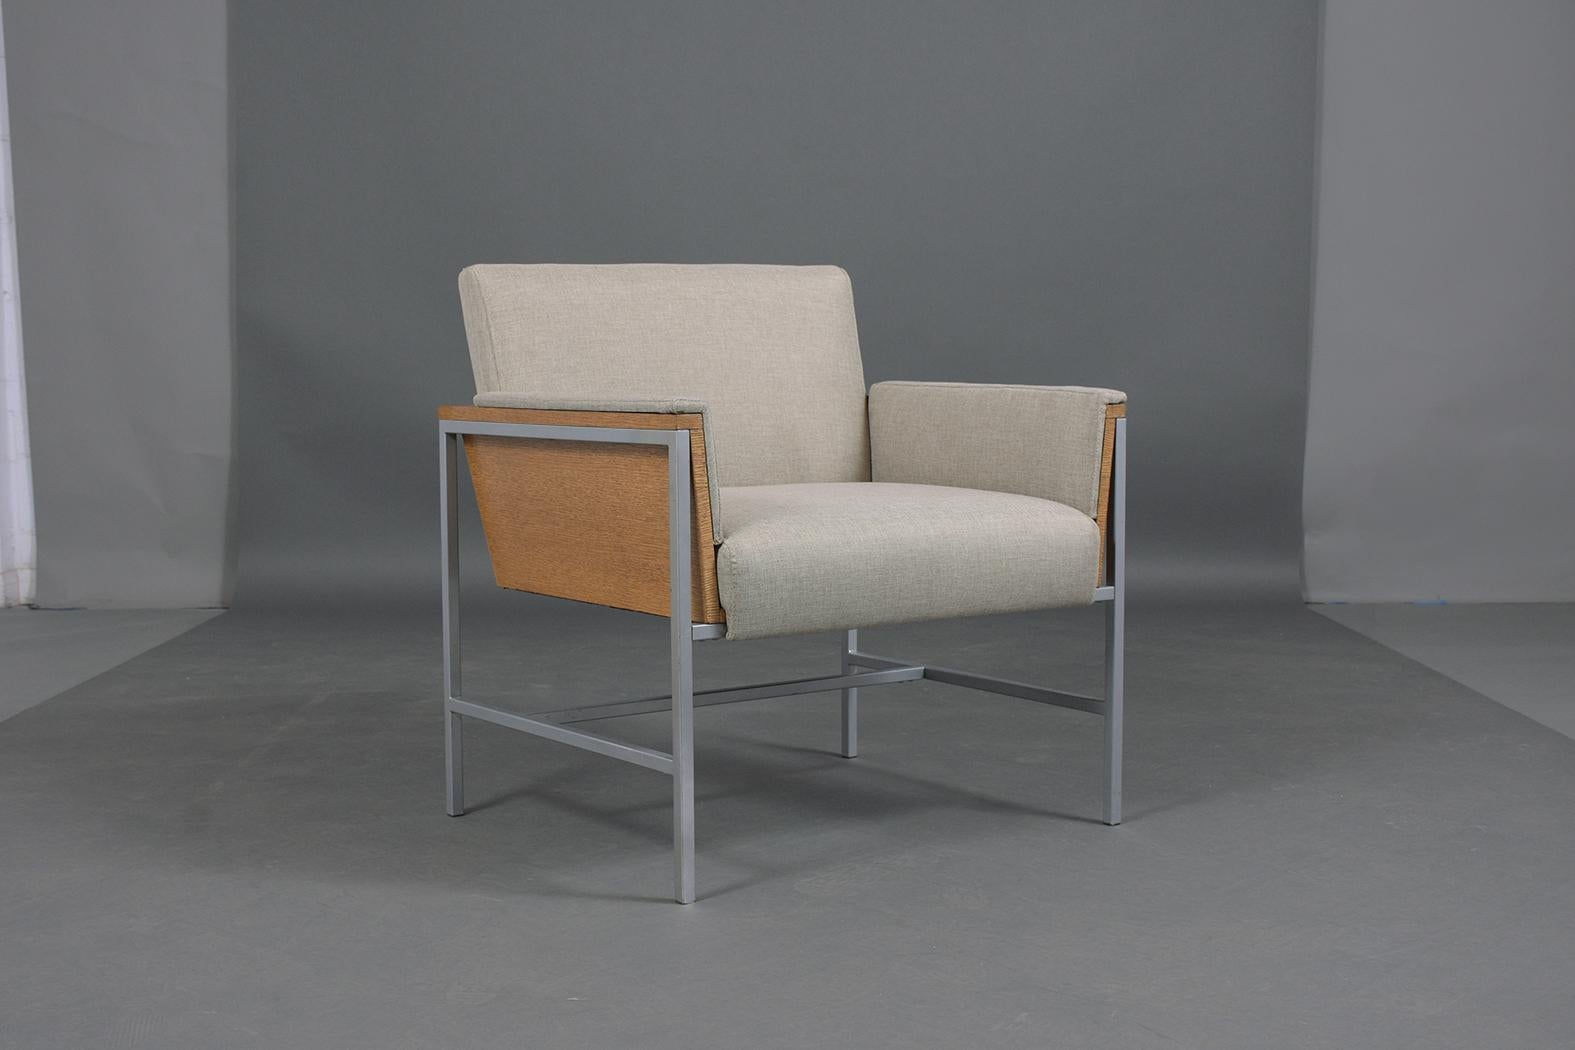 Pair of Mid-Century Modern Club Chairs 1